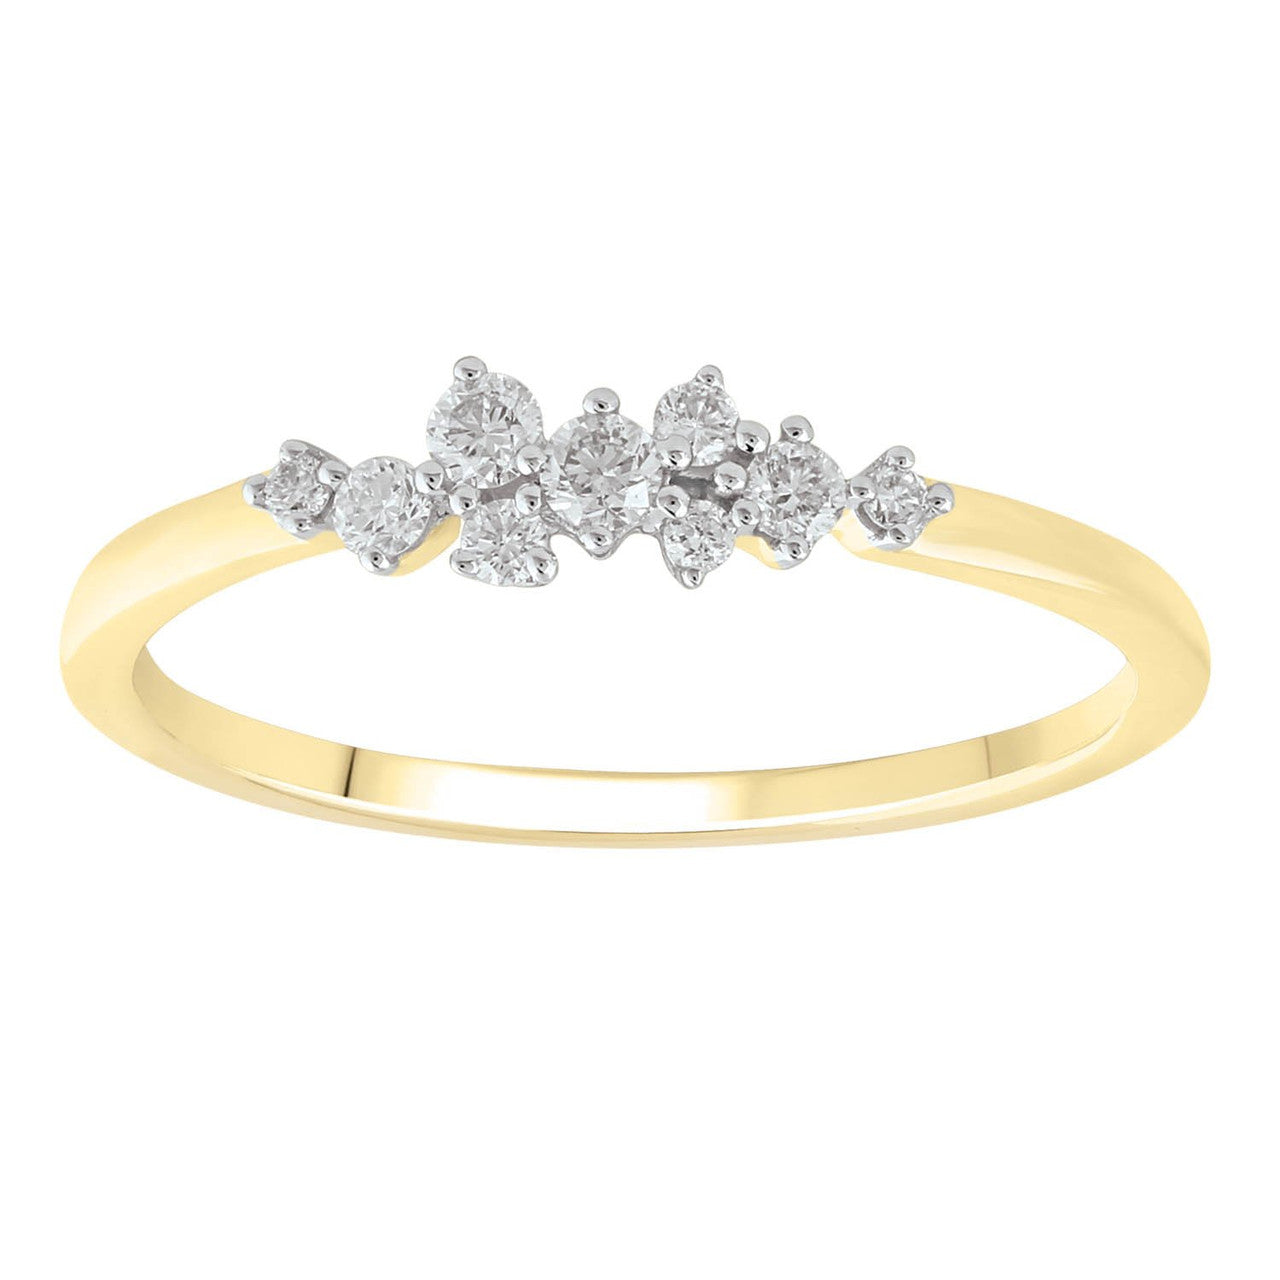 Ice Jewellery Ring with 0.15ct Diamonds in 9K Yellow Gold -  R-41813-015-Y | Ice Jewellery Australia